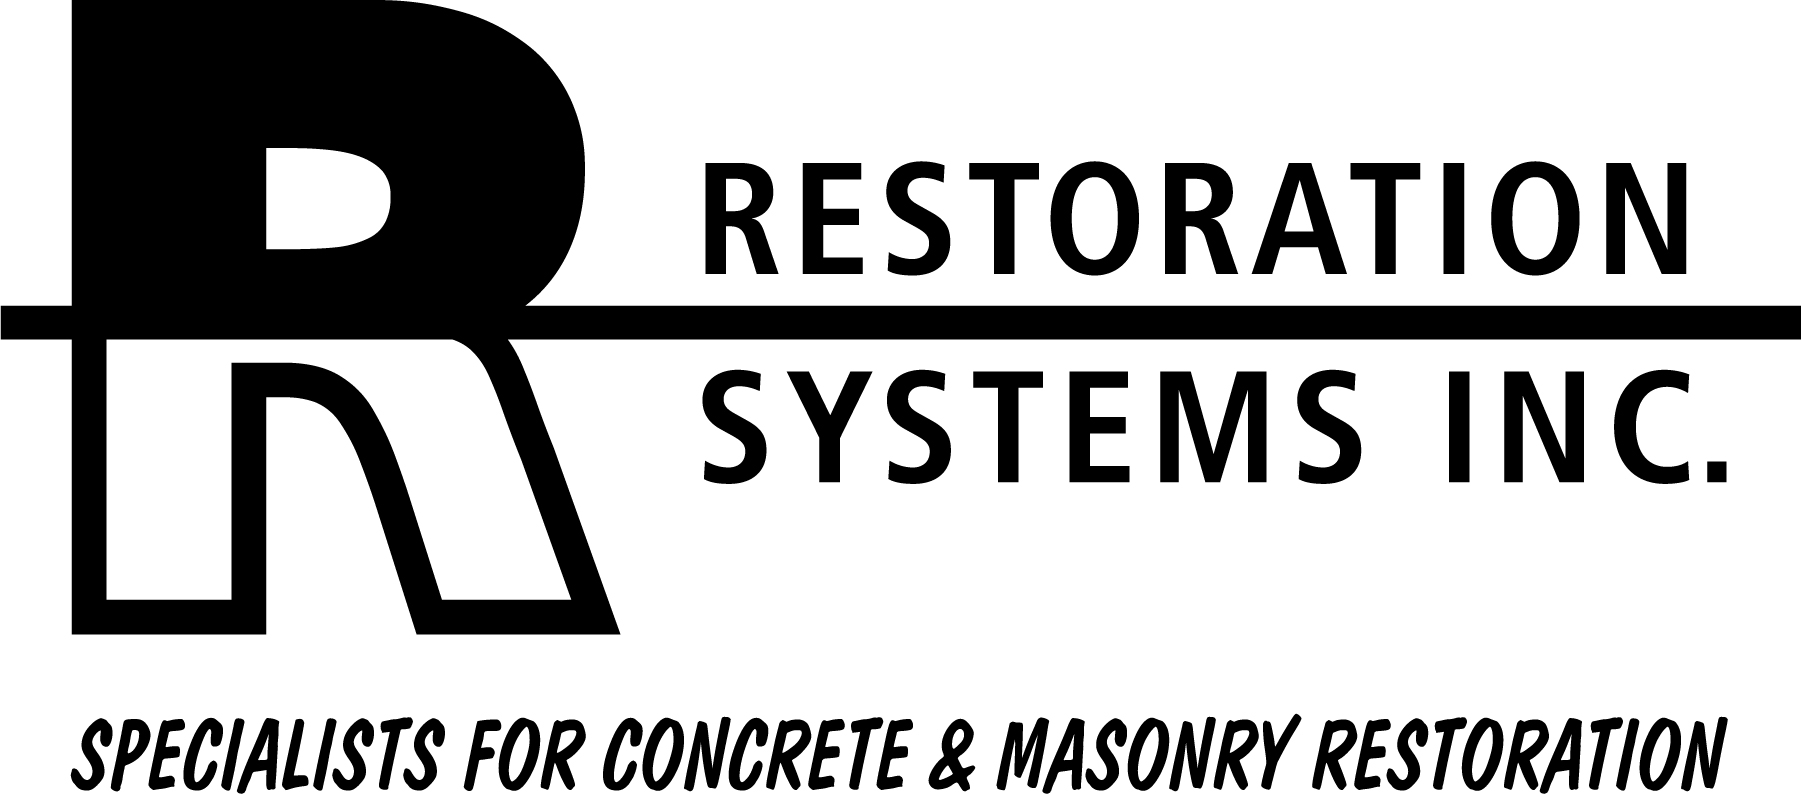 Restoration Systems Inc. Logo